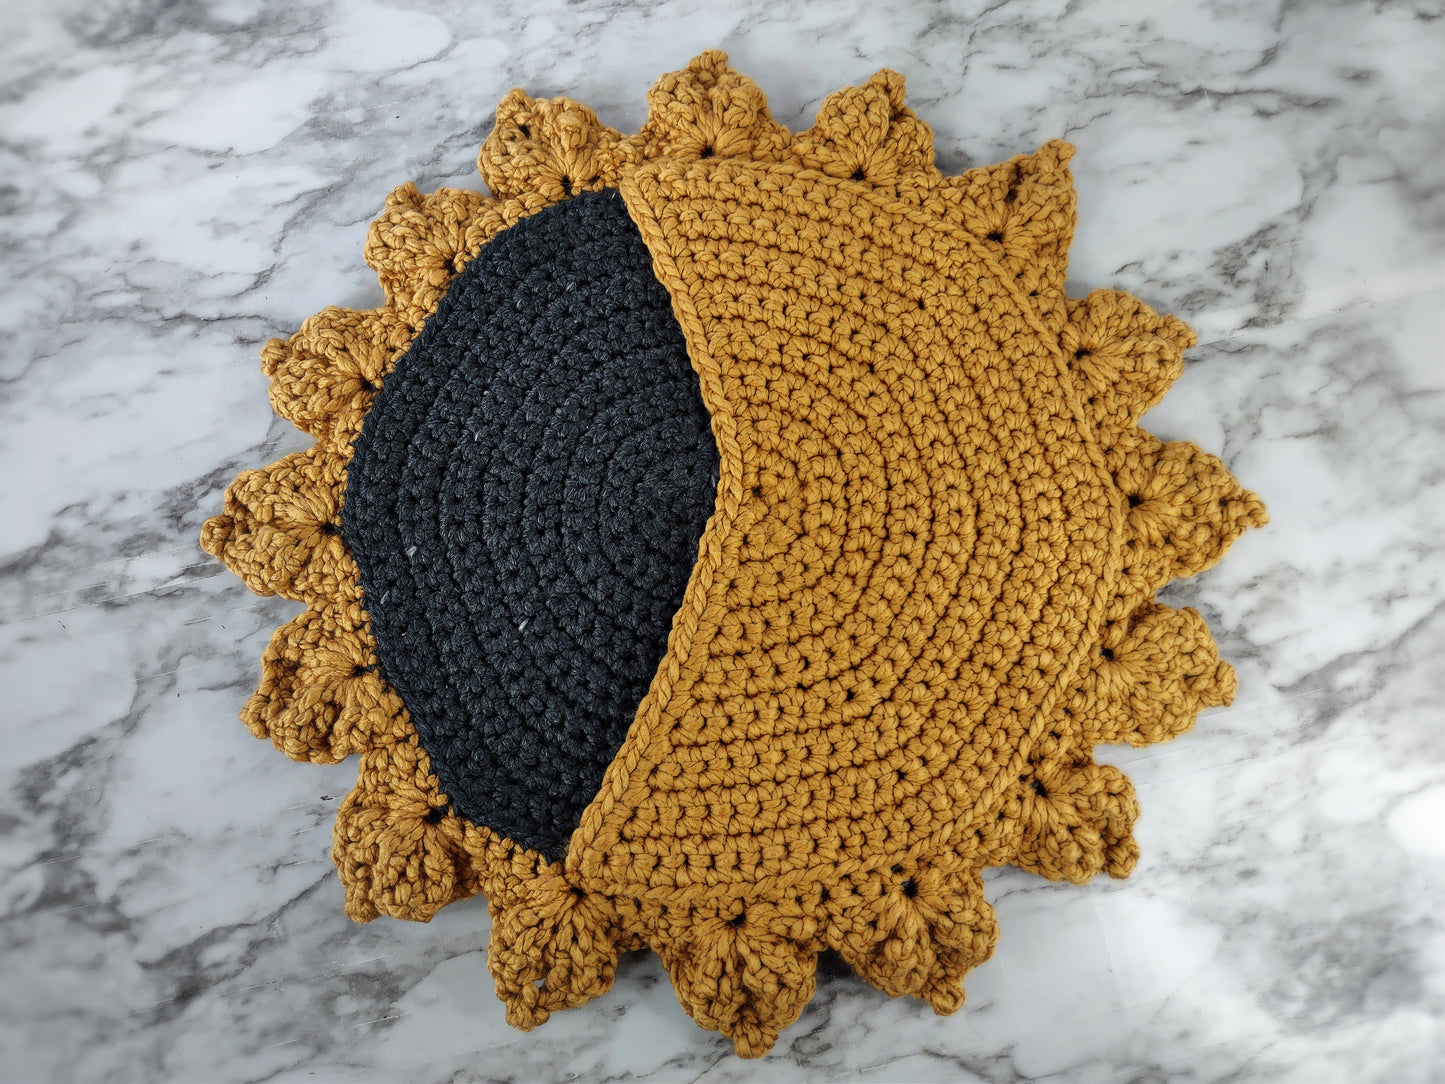 Bohemian Solar Eclipse Round Pillow Cover Crochet Pattern